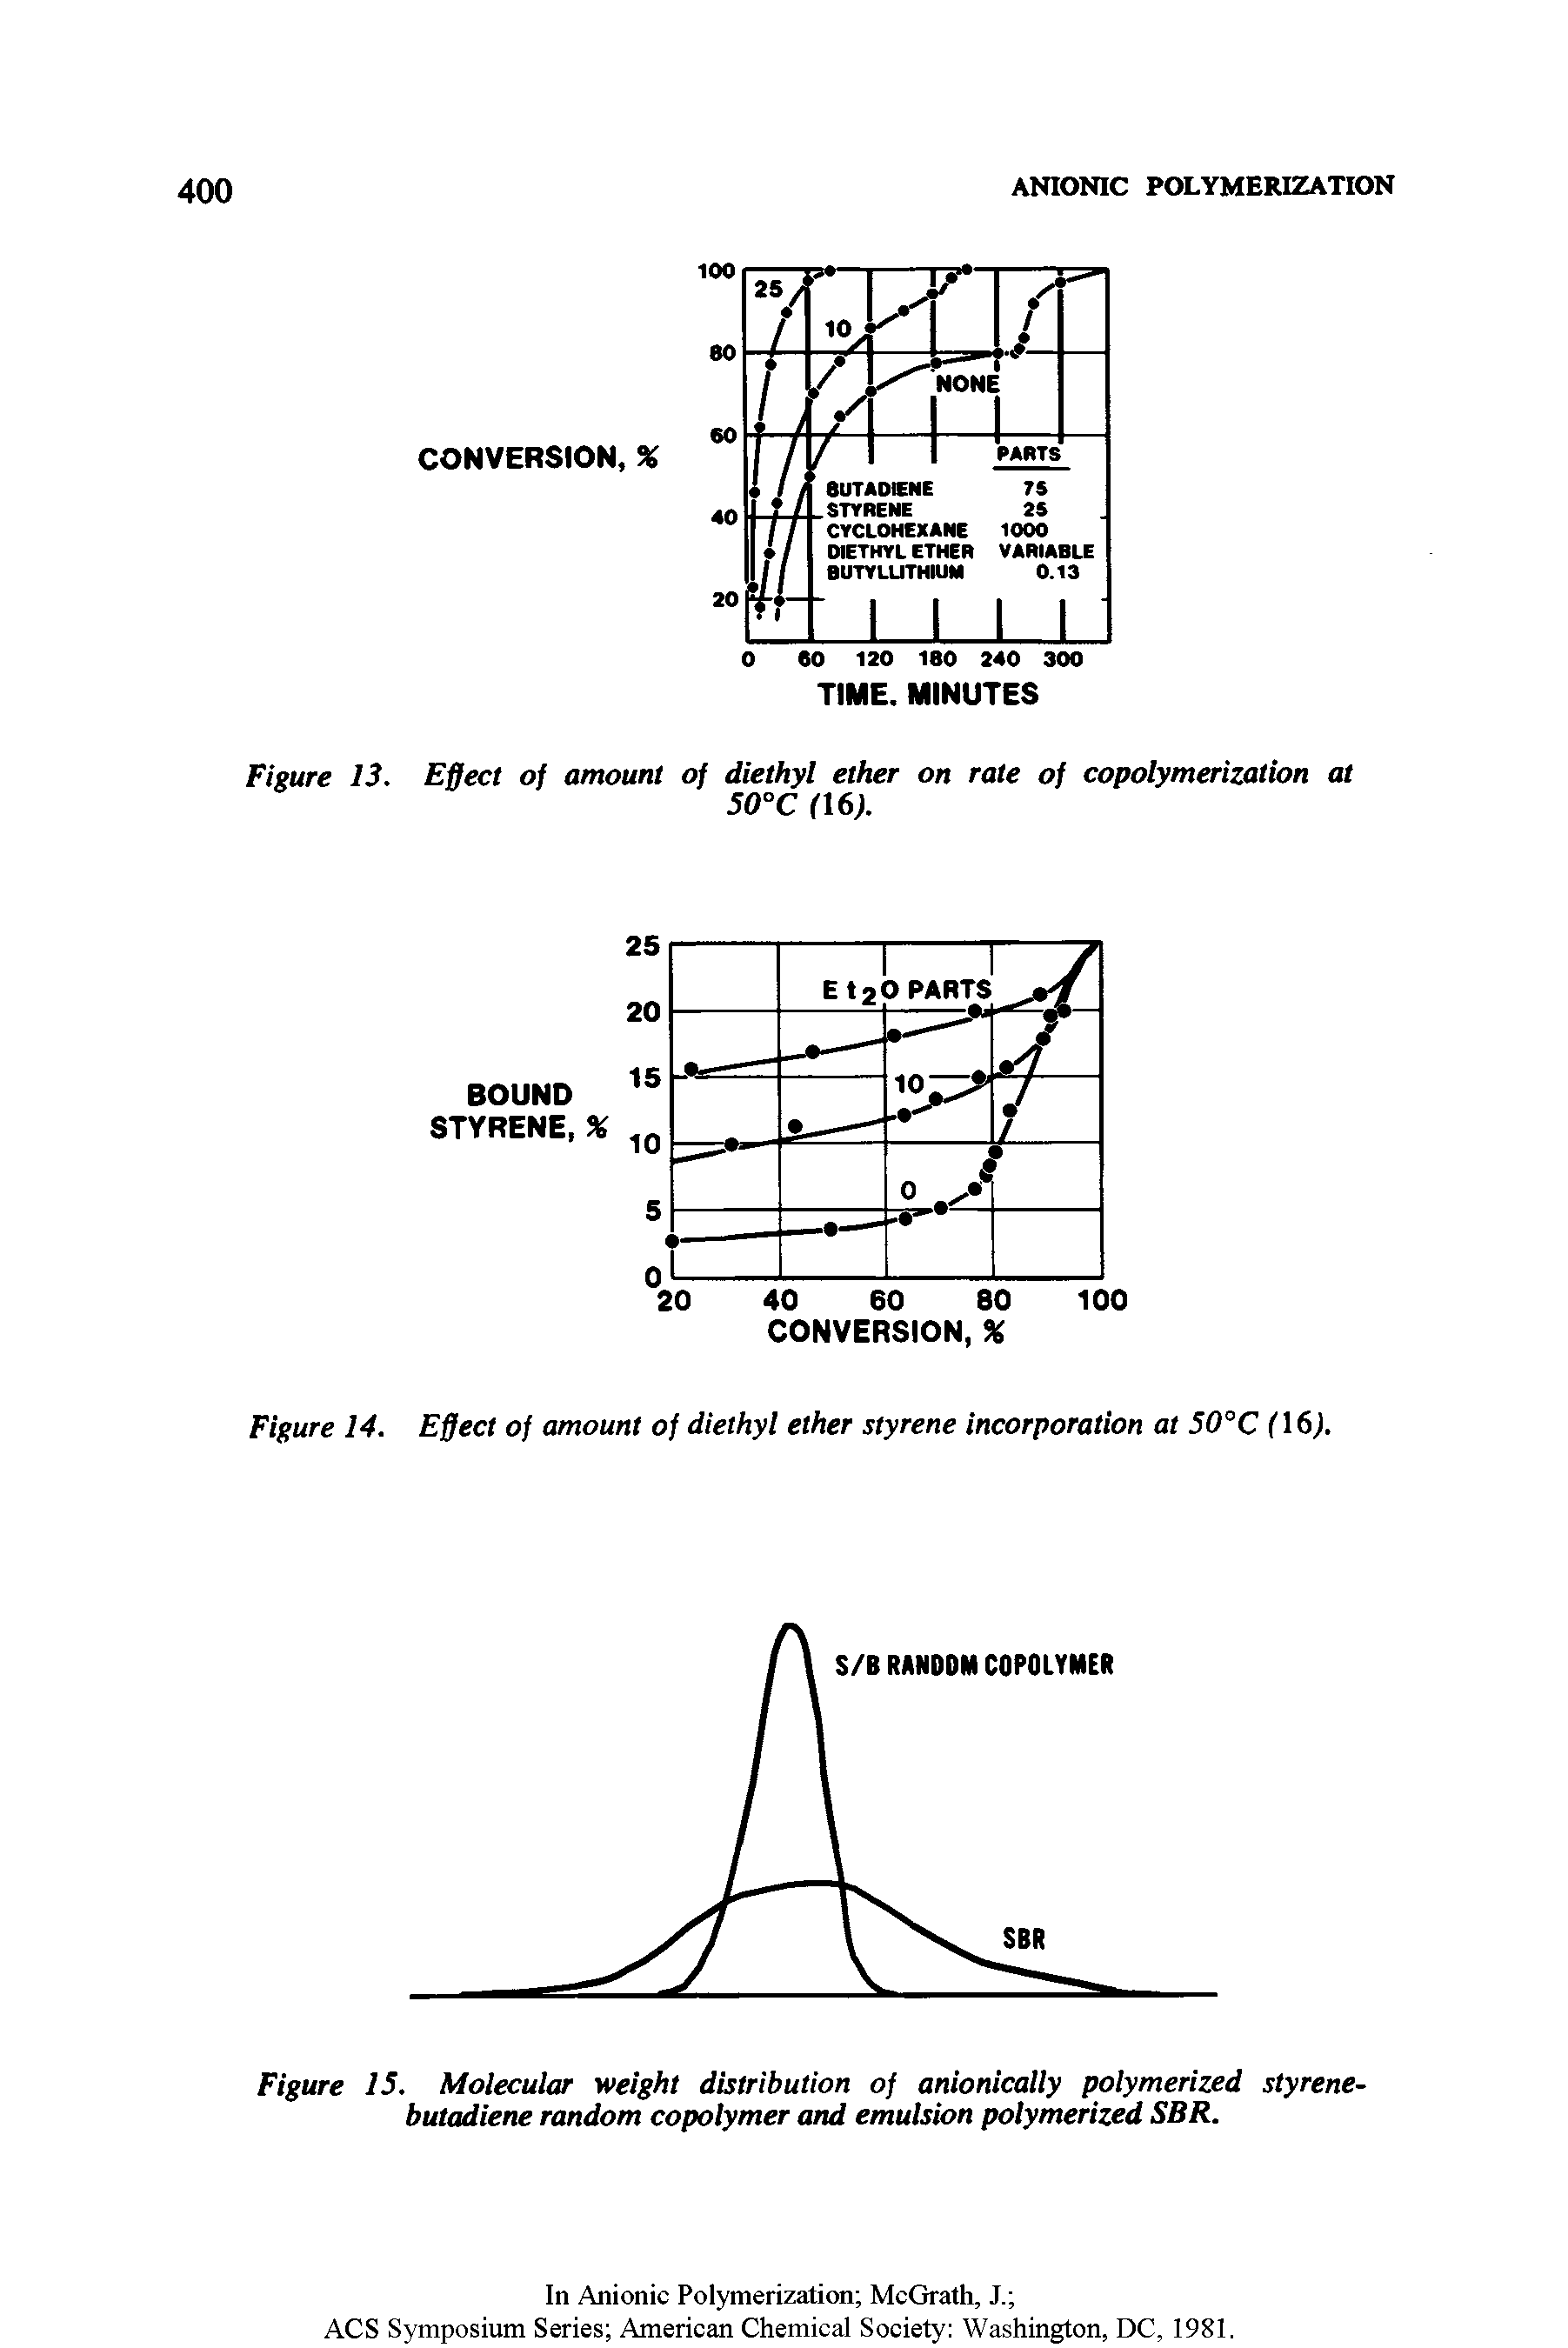 Figure 15. Molecular weight distribution of anionically polymerized styrene-butadiene random copolymer and emulsion polymerized SBR.